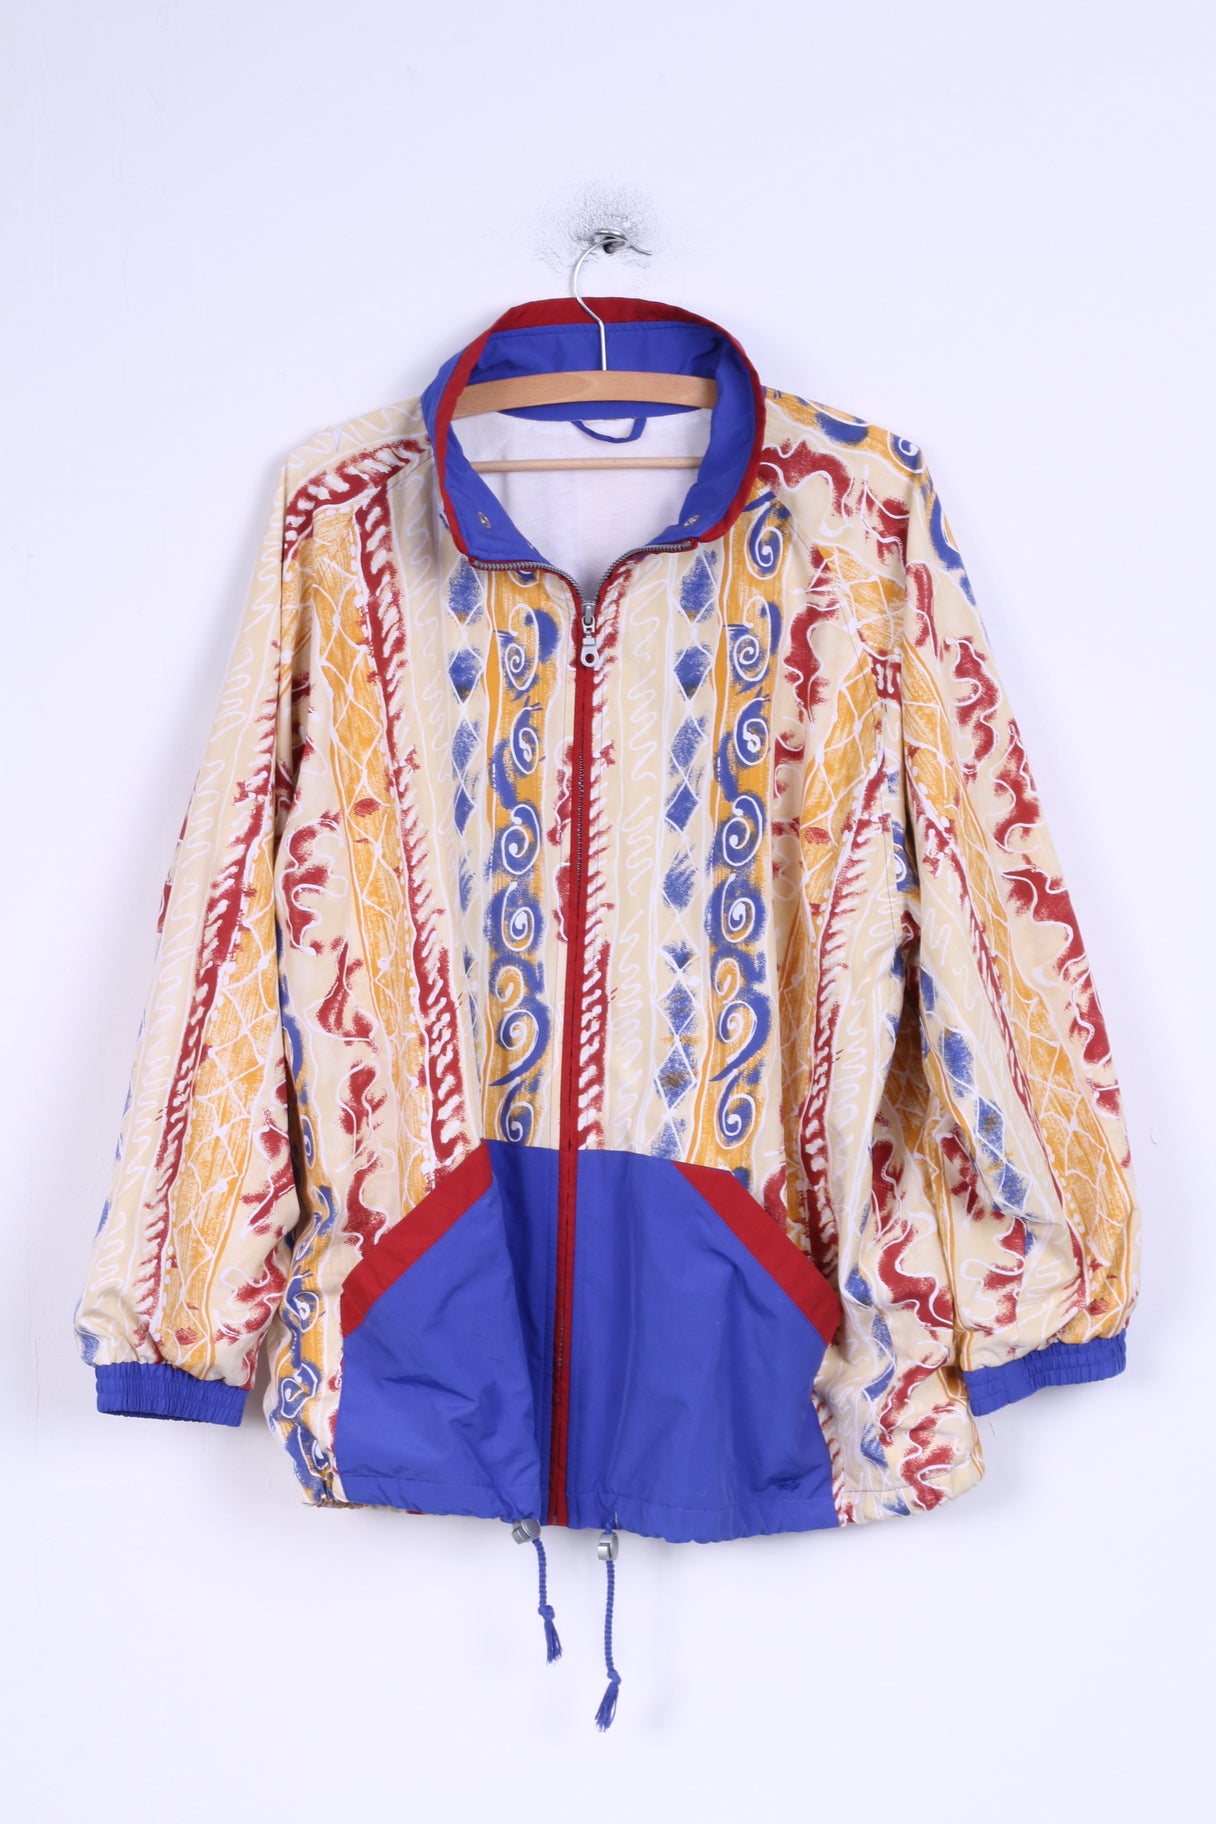 Triumph Happy Days Womens 40 L Jacket Vintage Zip Up Printed Lightweight Top